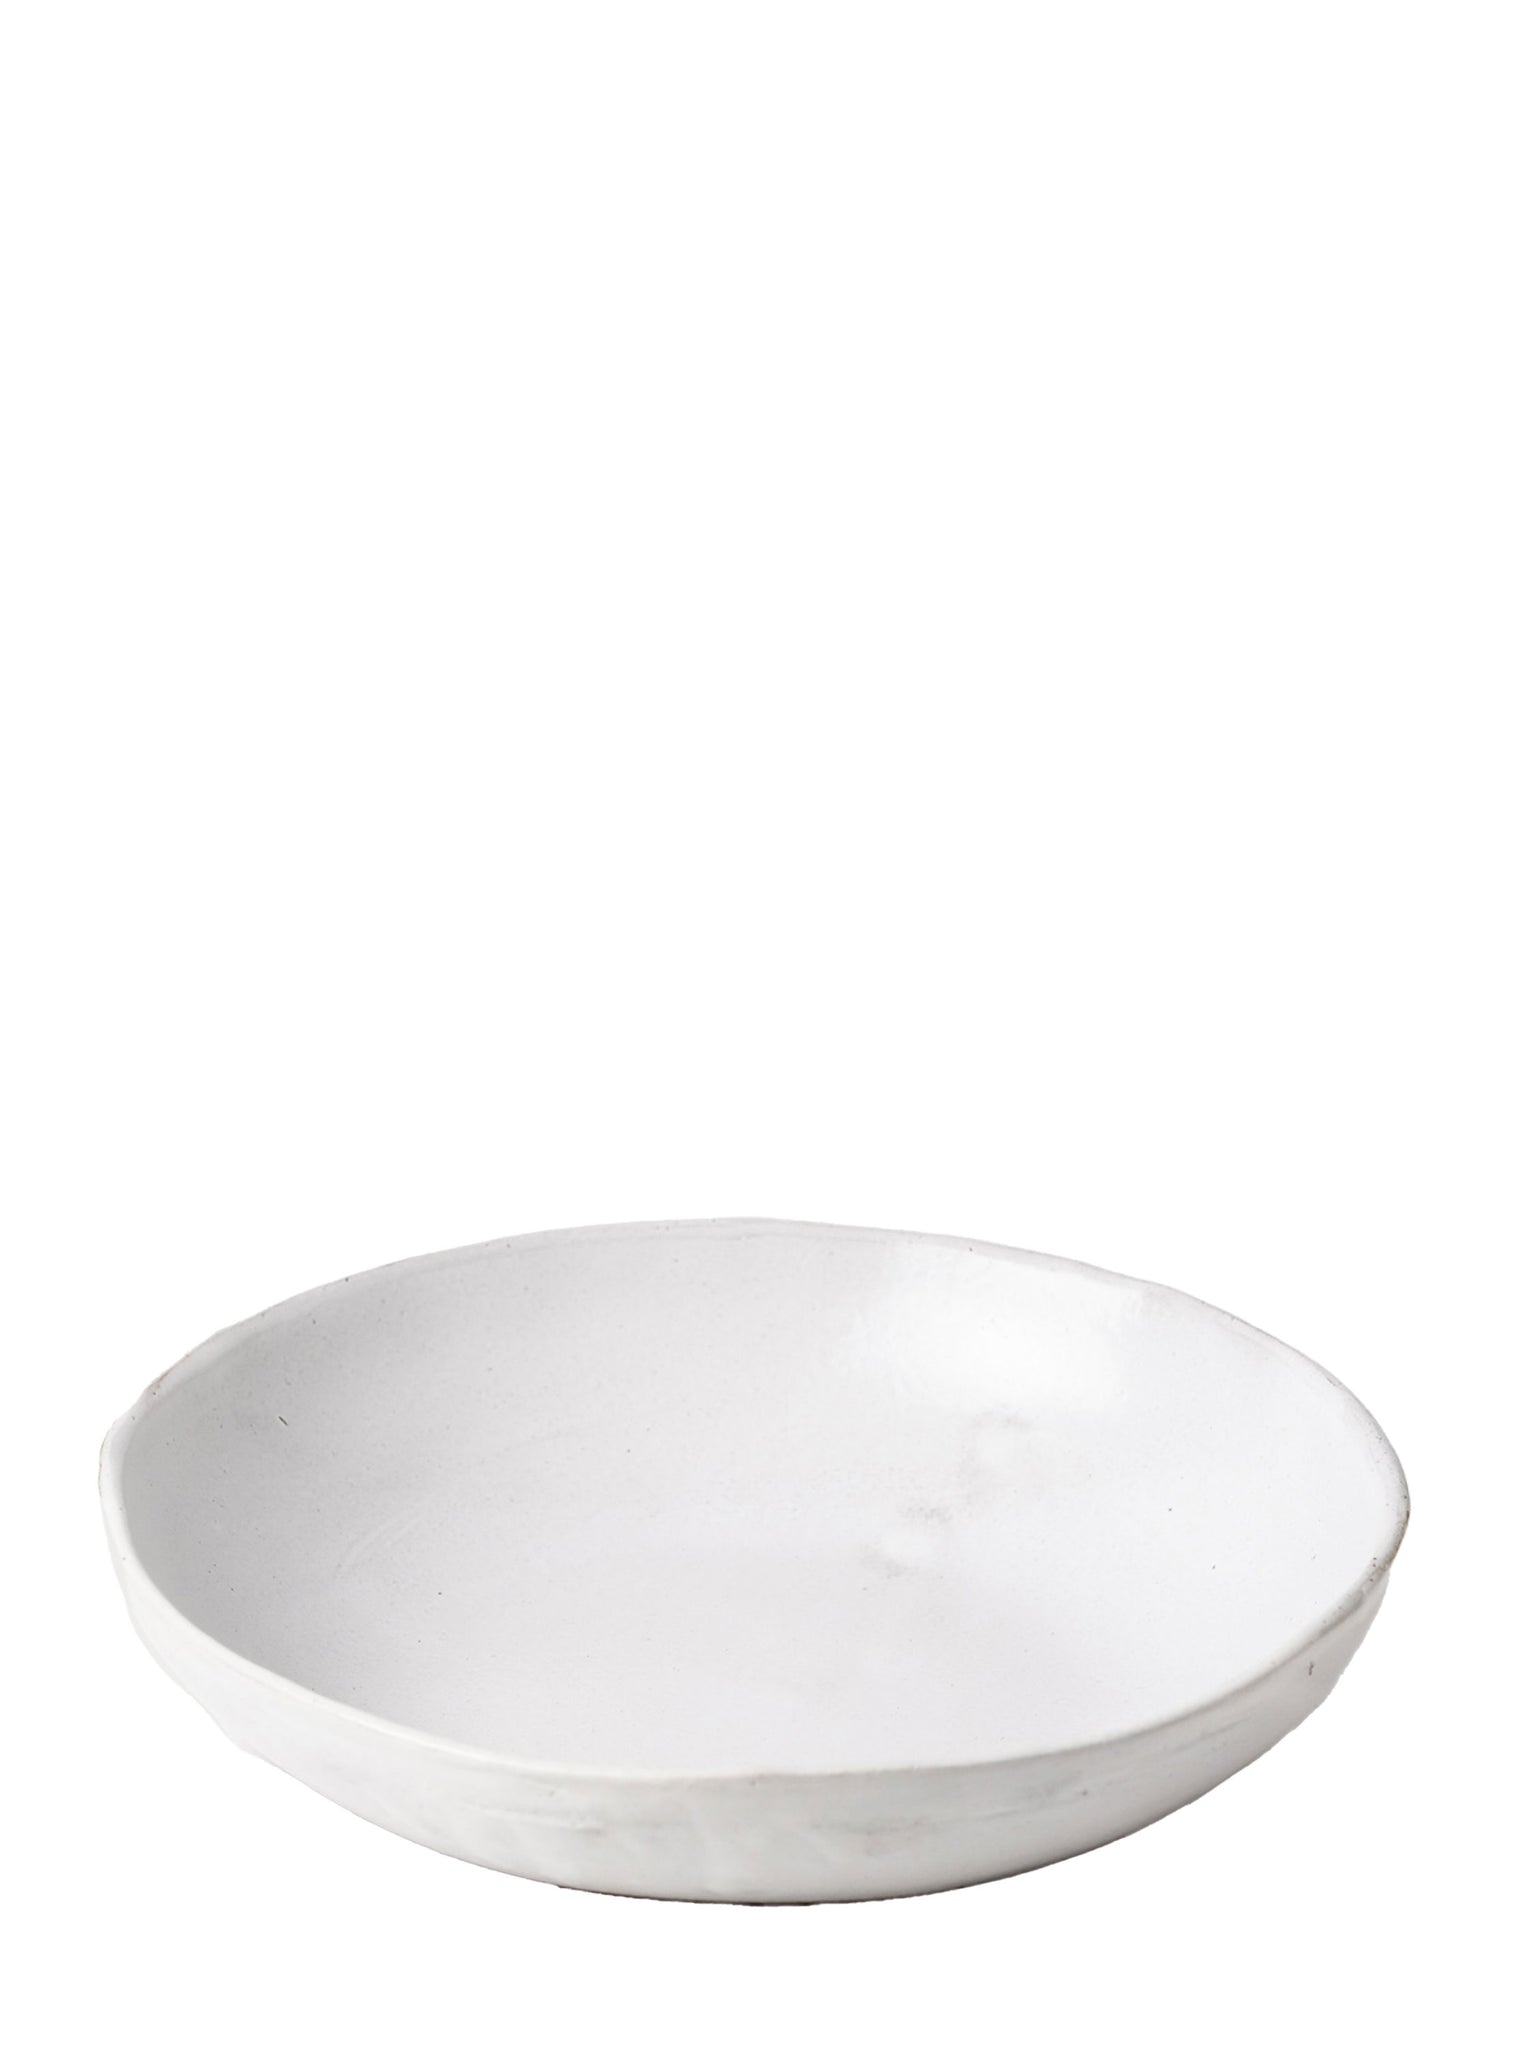 Ivory white hand thrown ceramic pasta bowl by Gaëlle Le Doledec